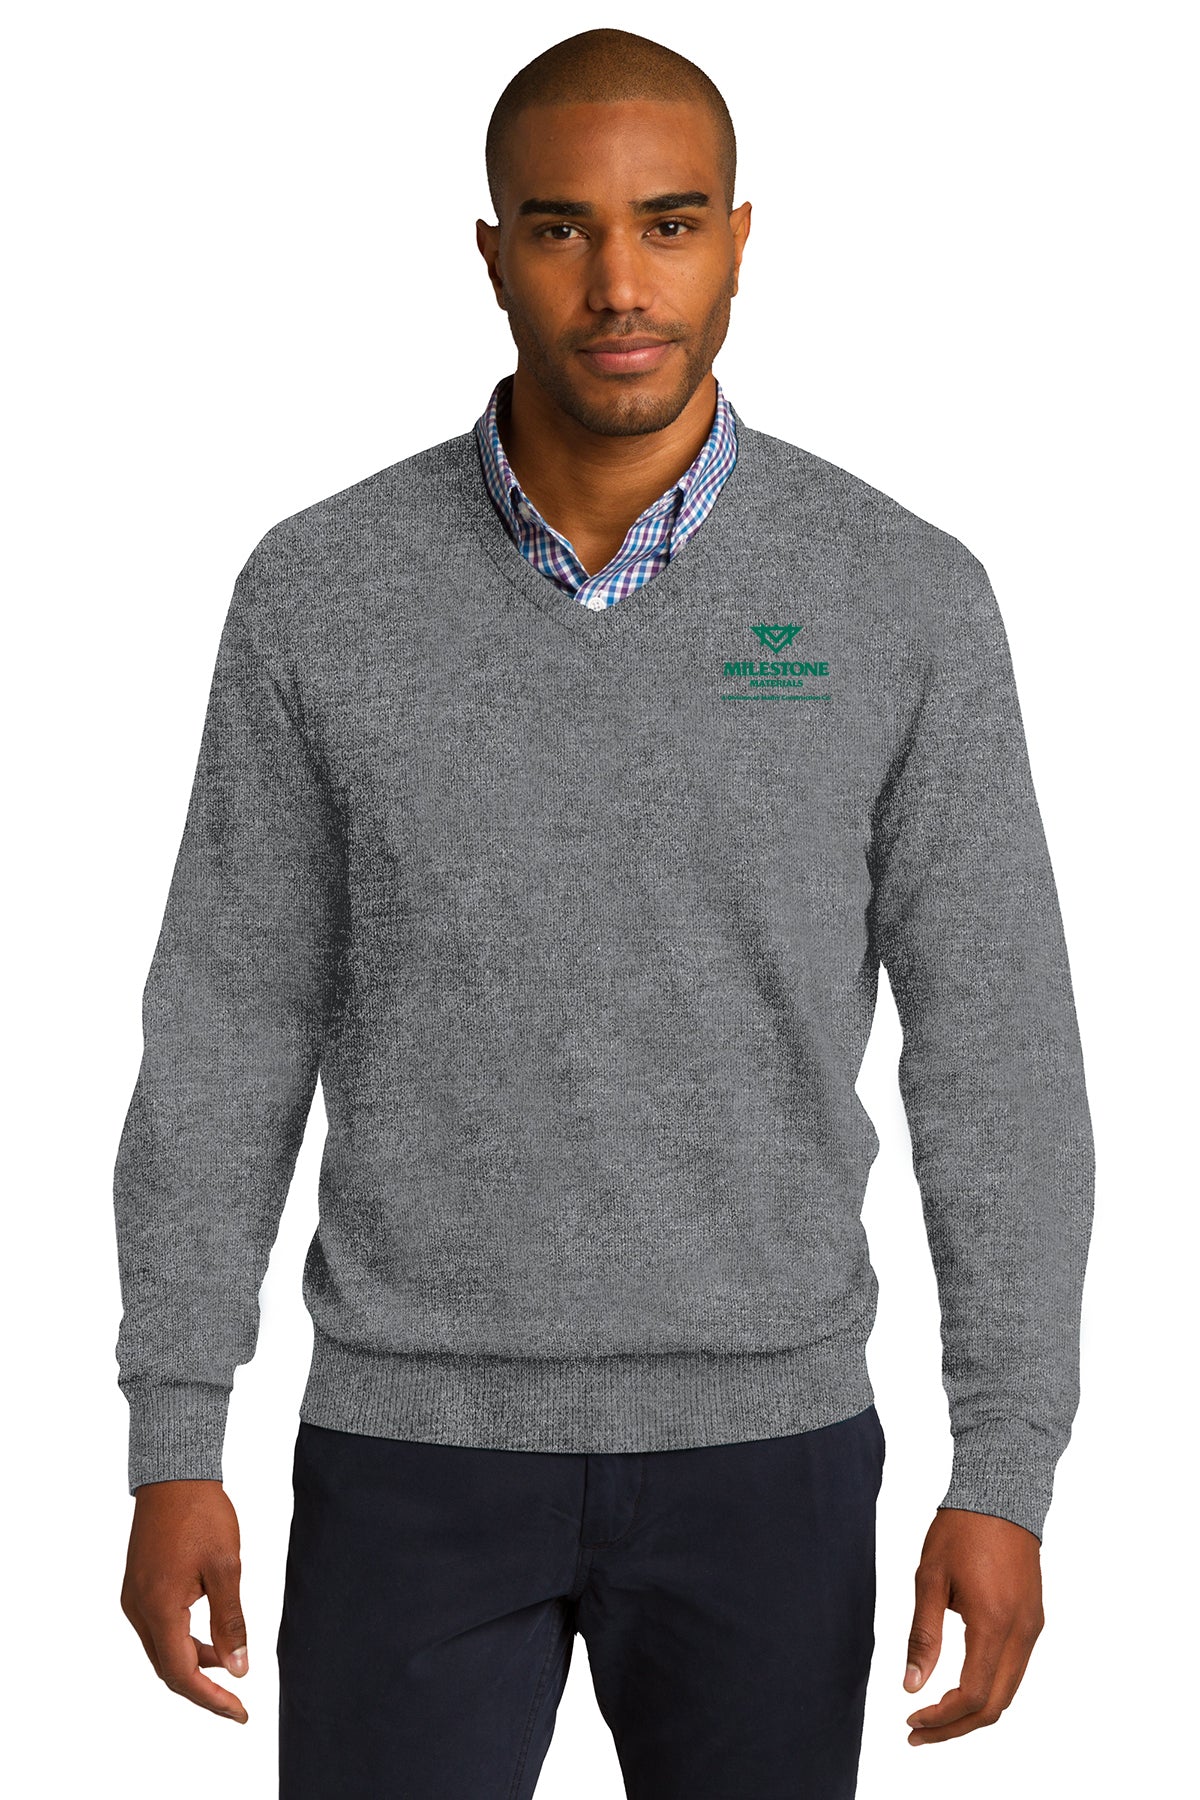 Milestone Materials V-Neck Sweater